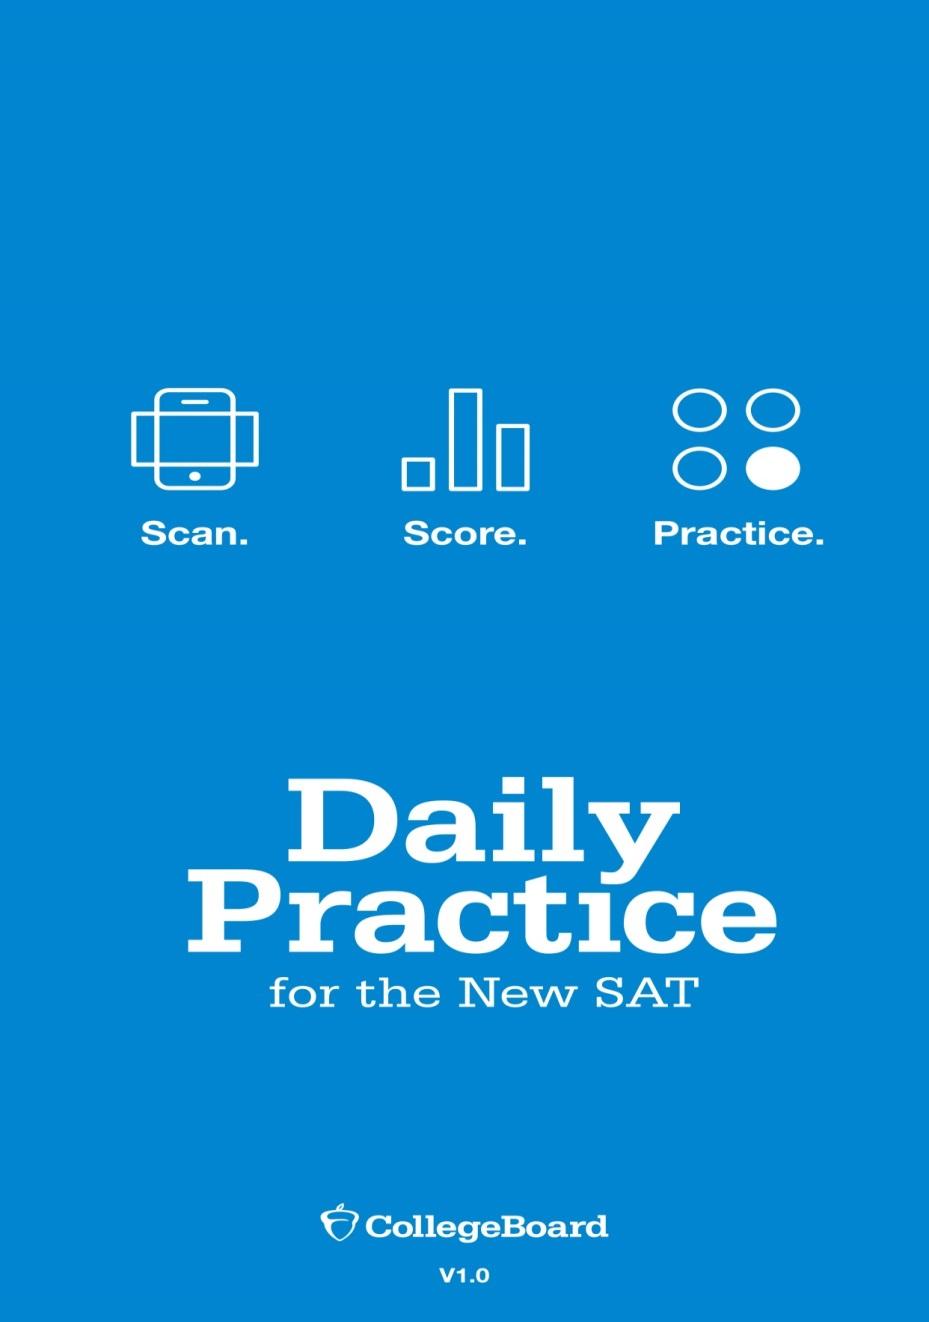 Daily Practice App